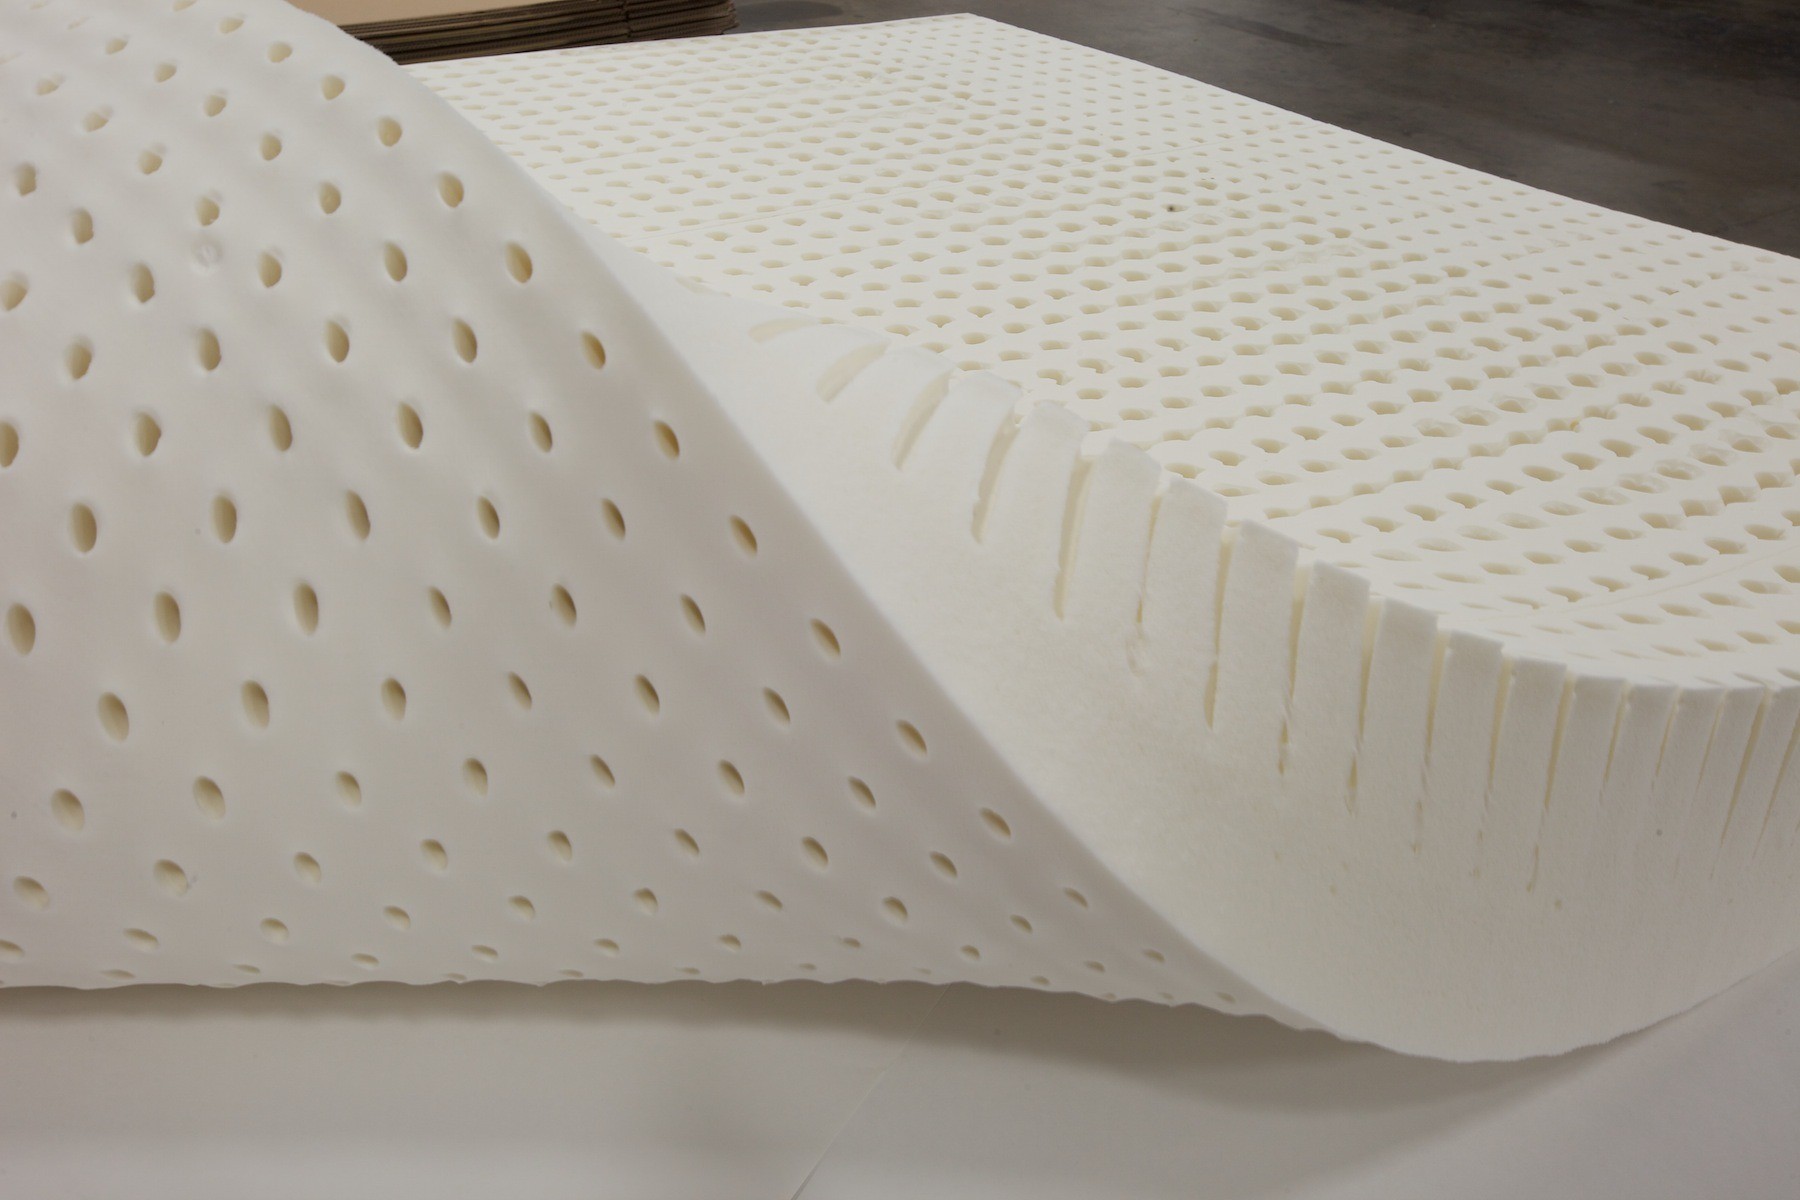 latex foam mattress pros cons